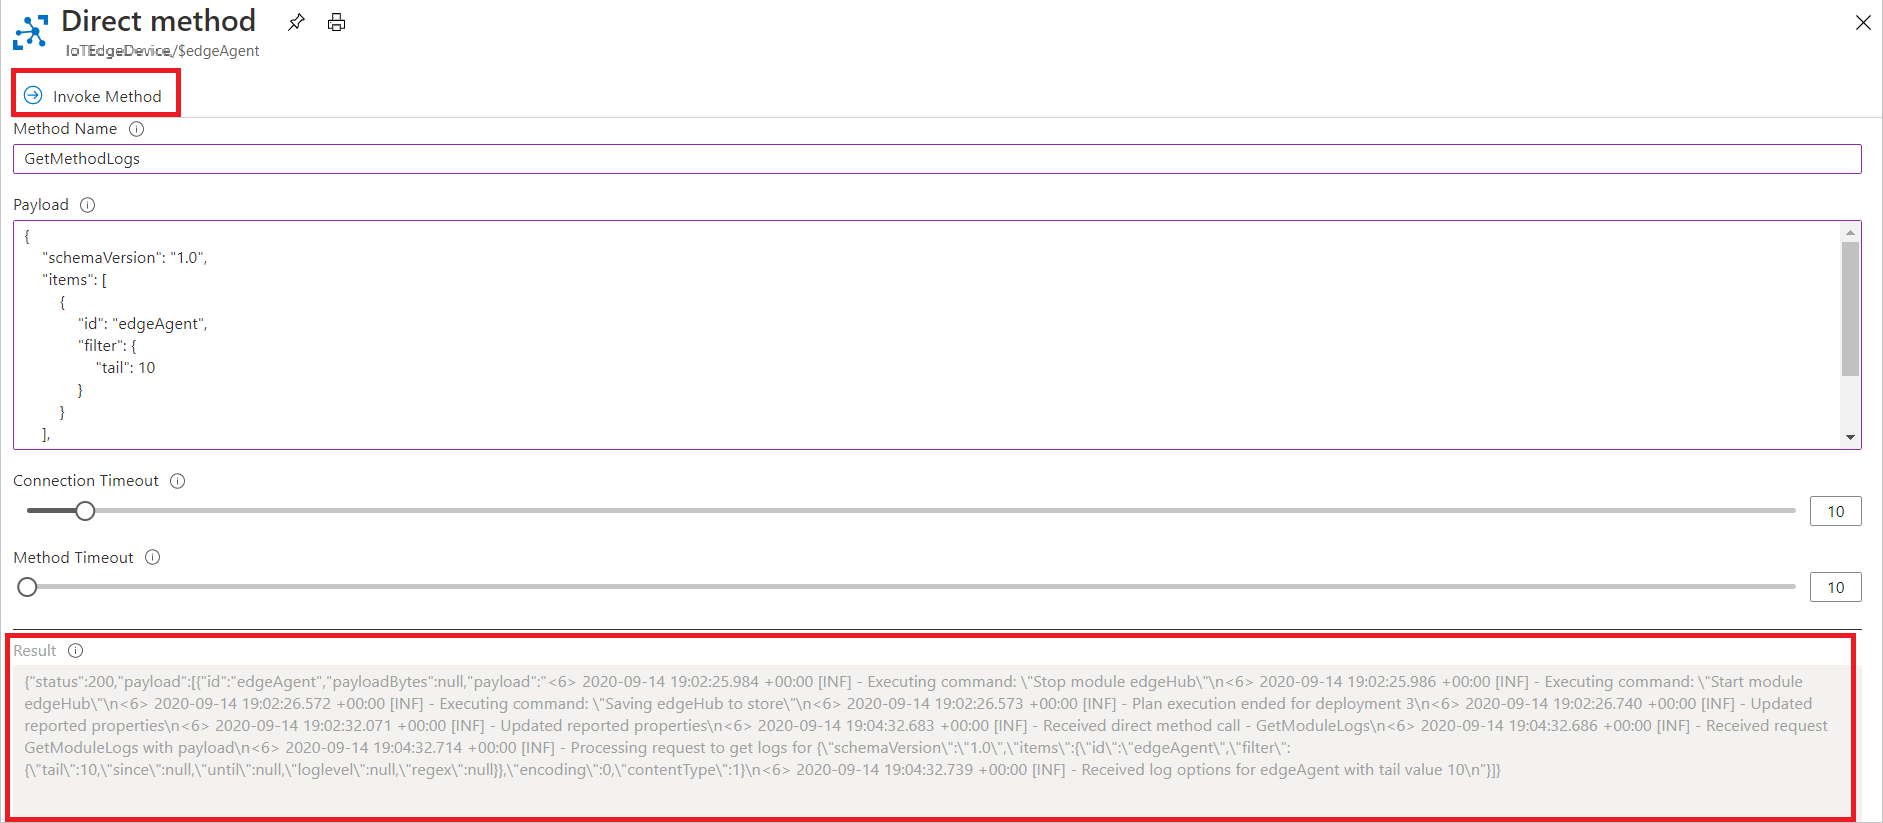 Screenshot of how to invoke direct method GetModuleLogs in the Azure portal.